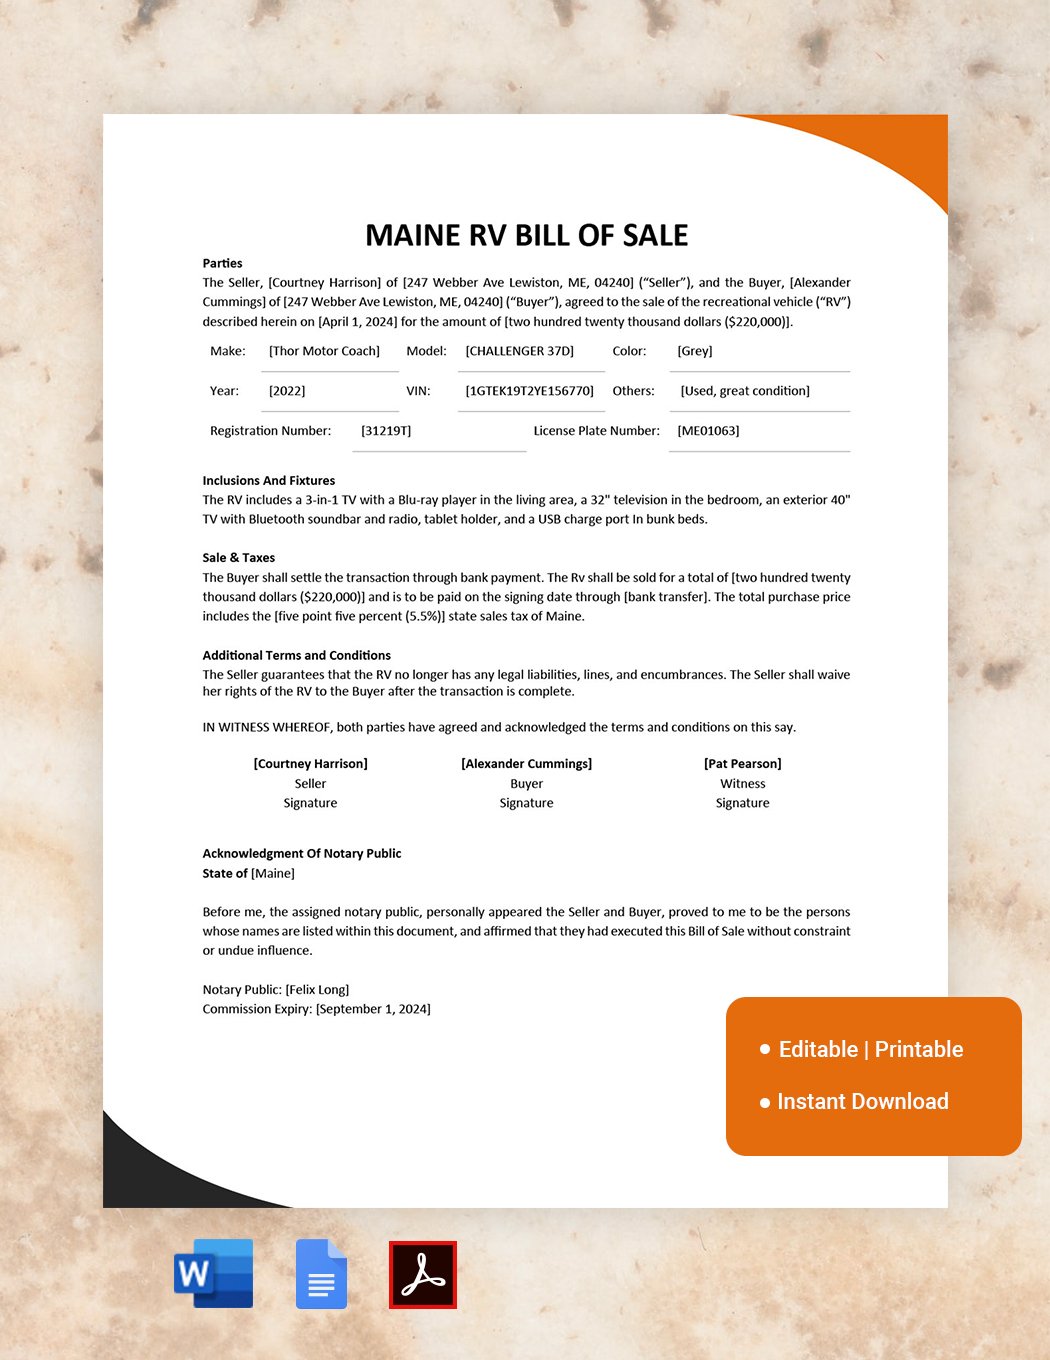 Maine RV Bill of Sale Template